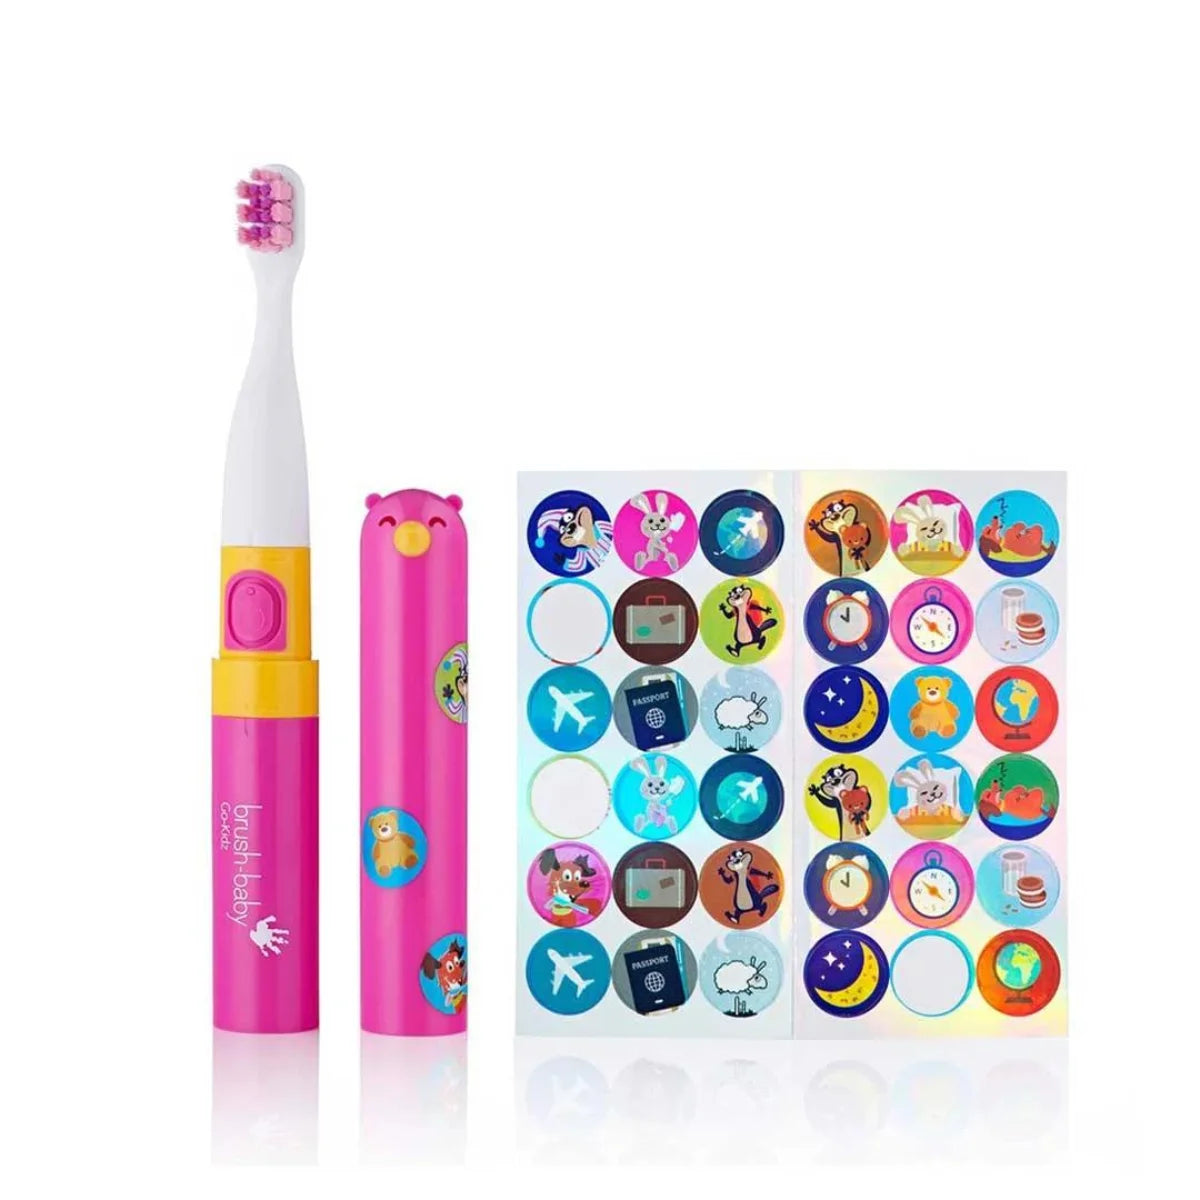 Pink brush-baby go-kidz travel electric toothbrush for kids